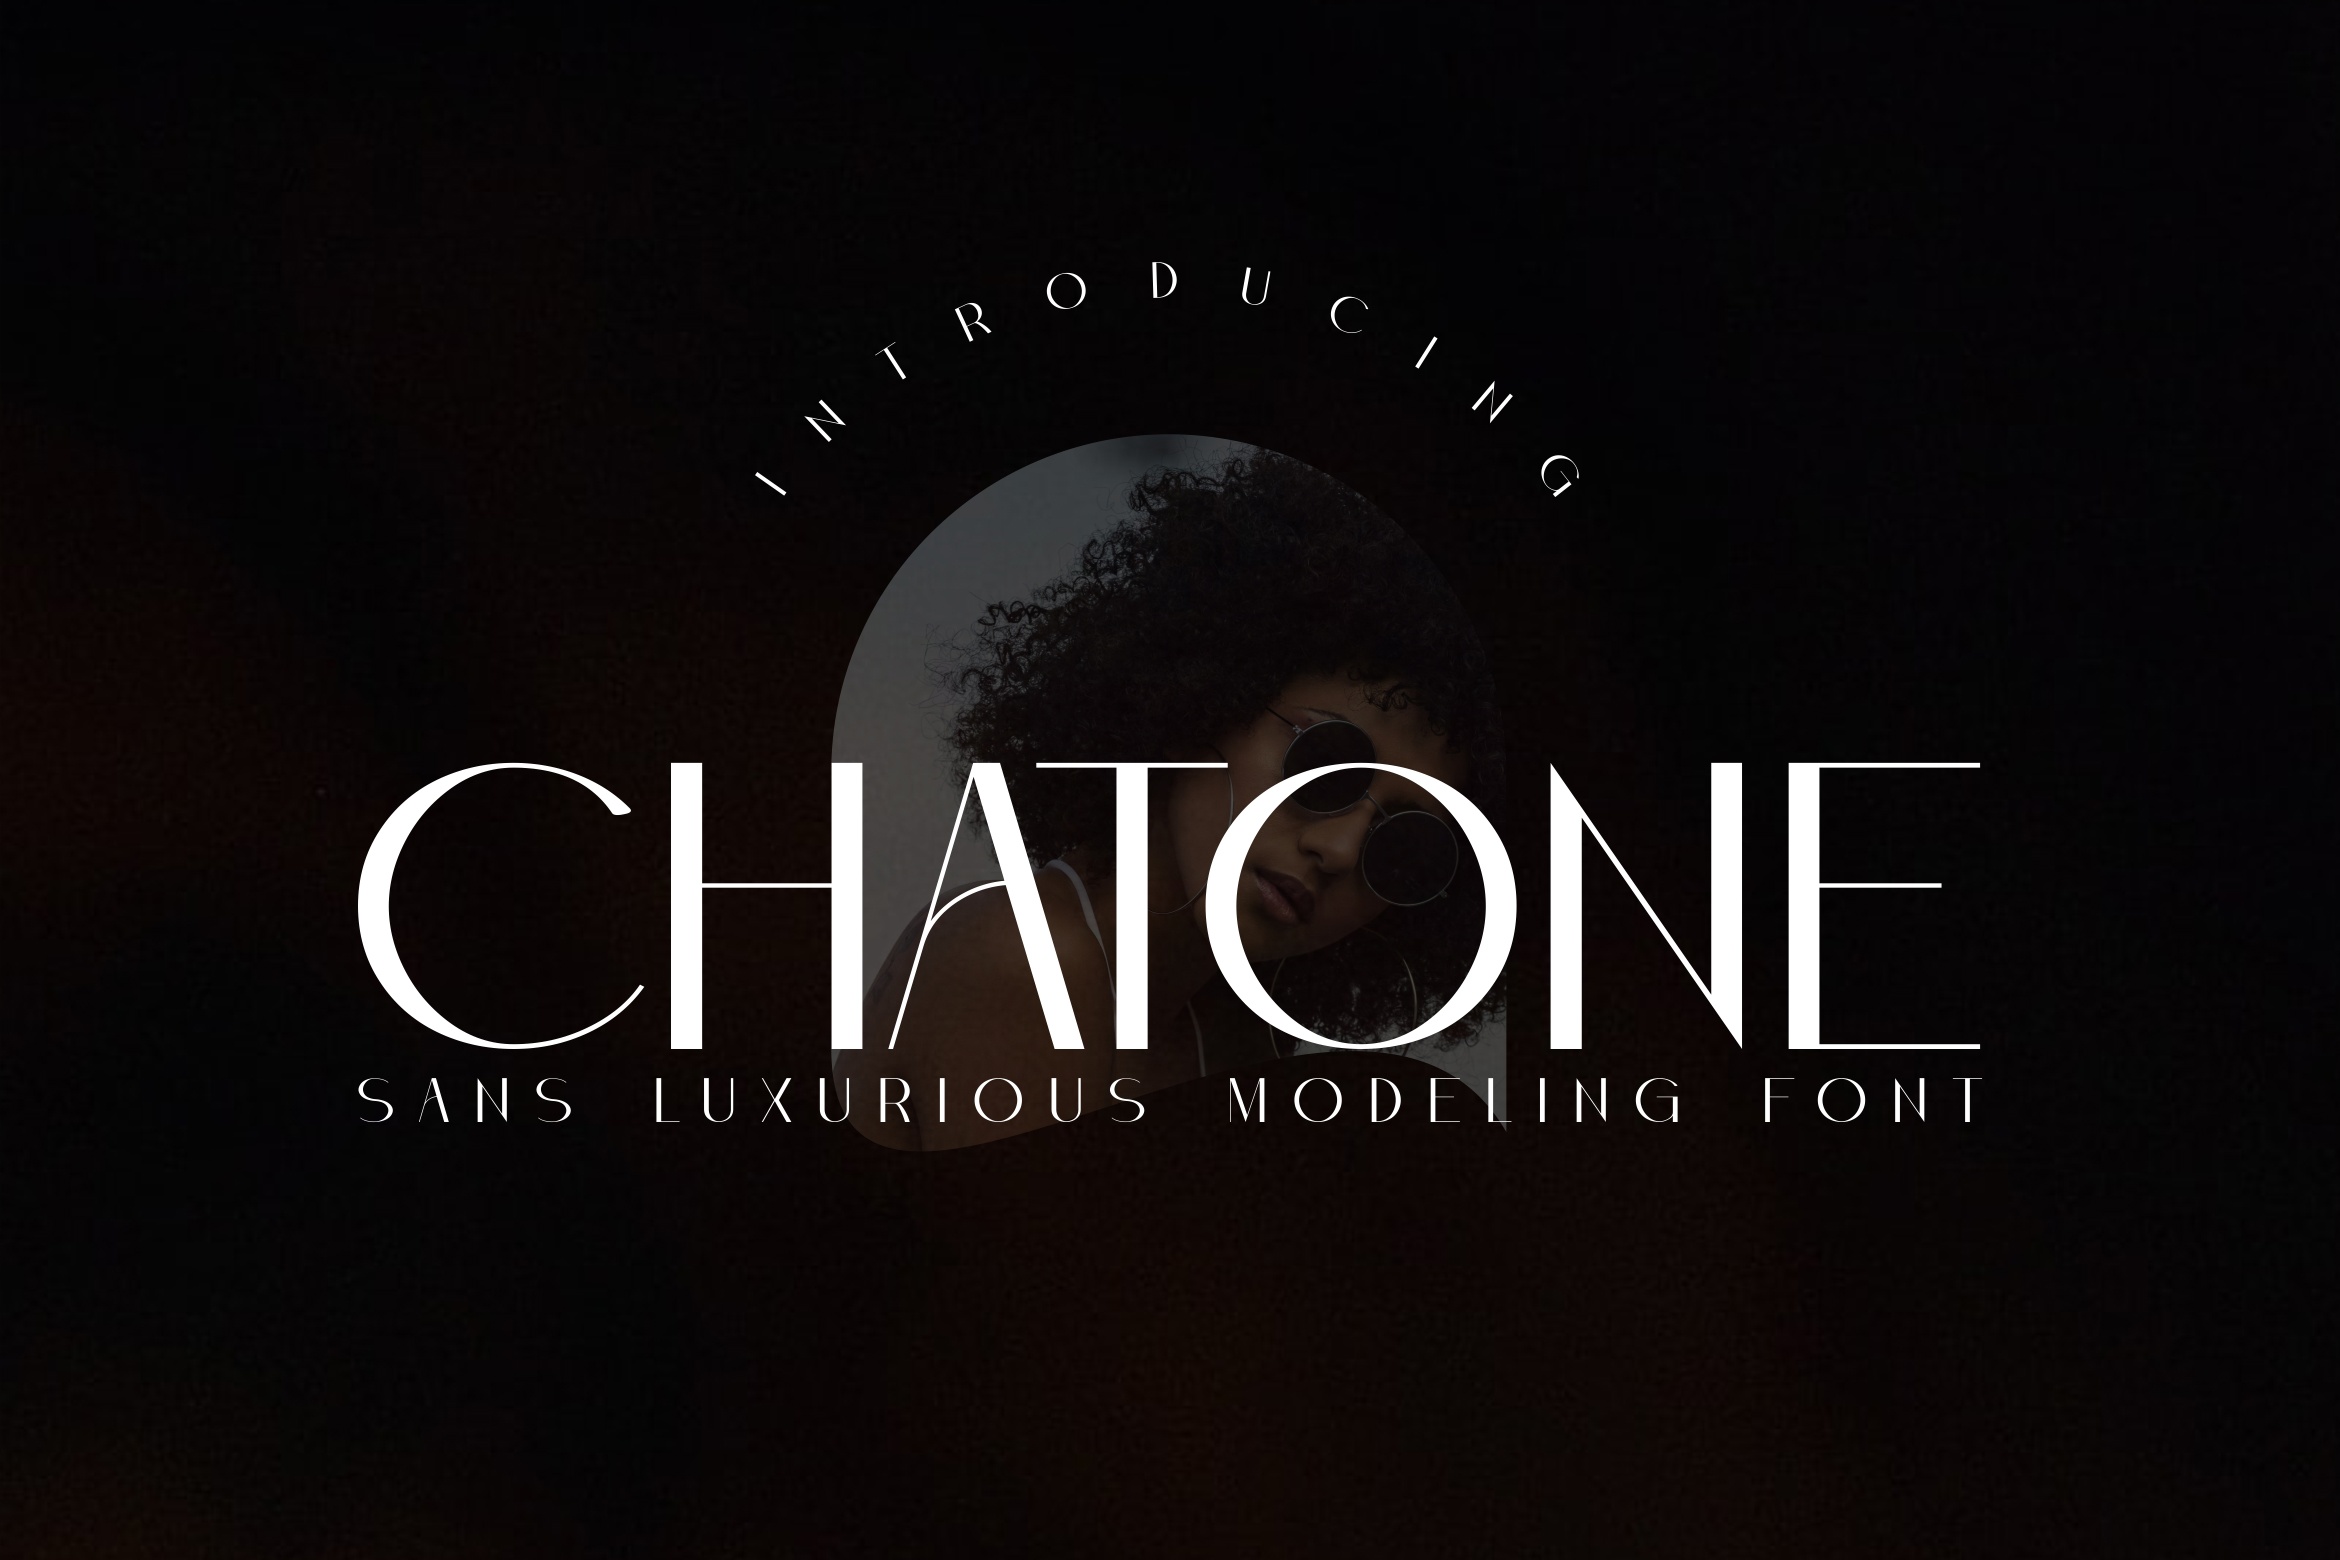 Chatone